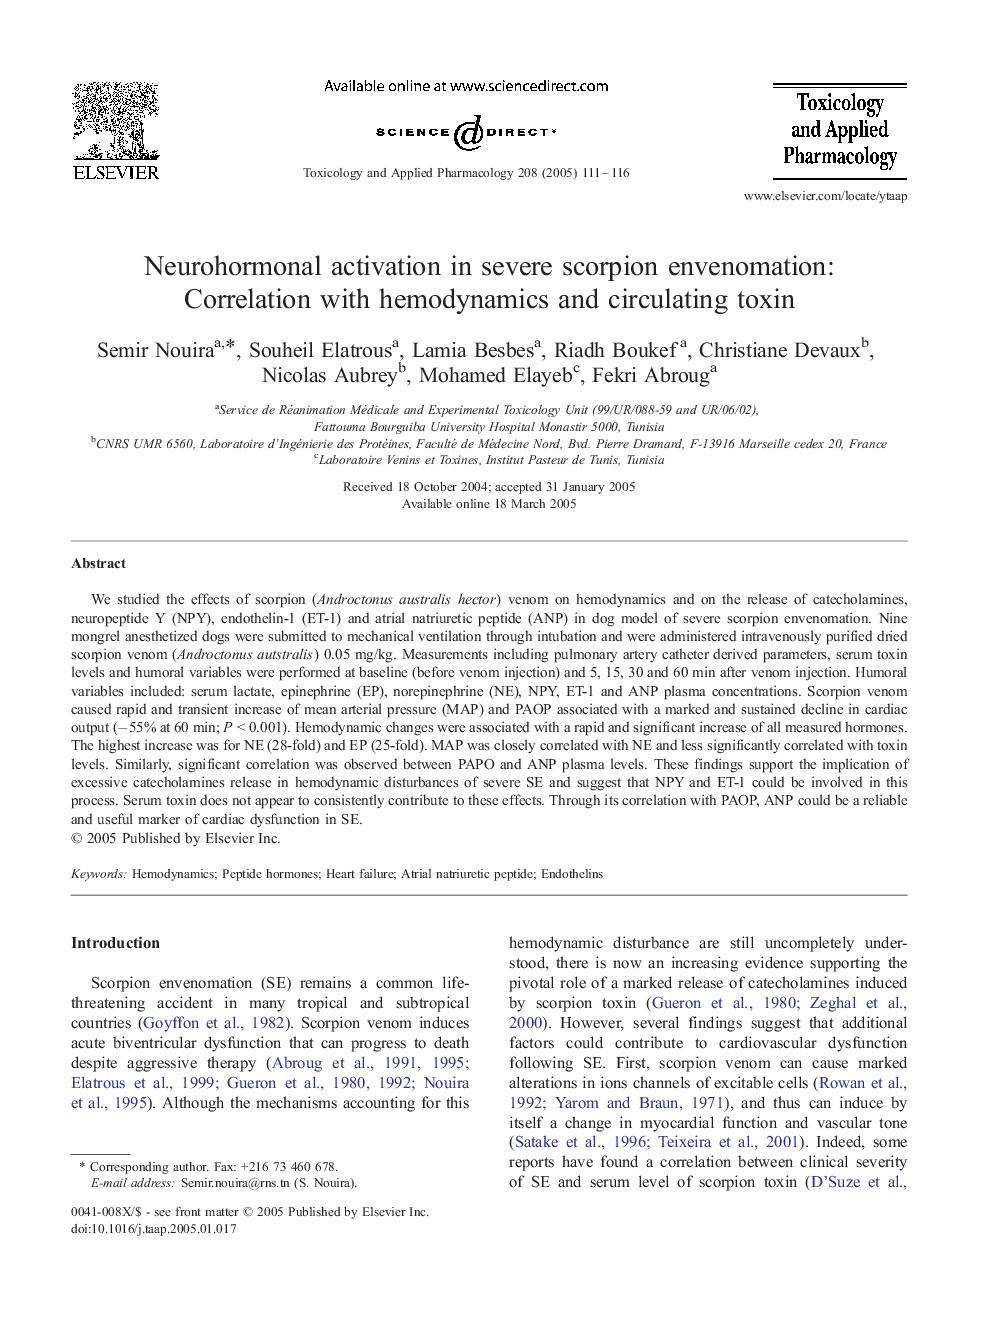 Neurohormonal activation in severe scorpion envenomation: correlation with hemodynamics and circulating toxin